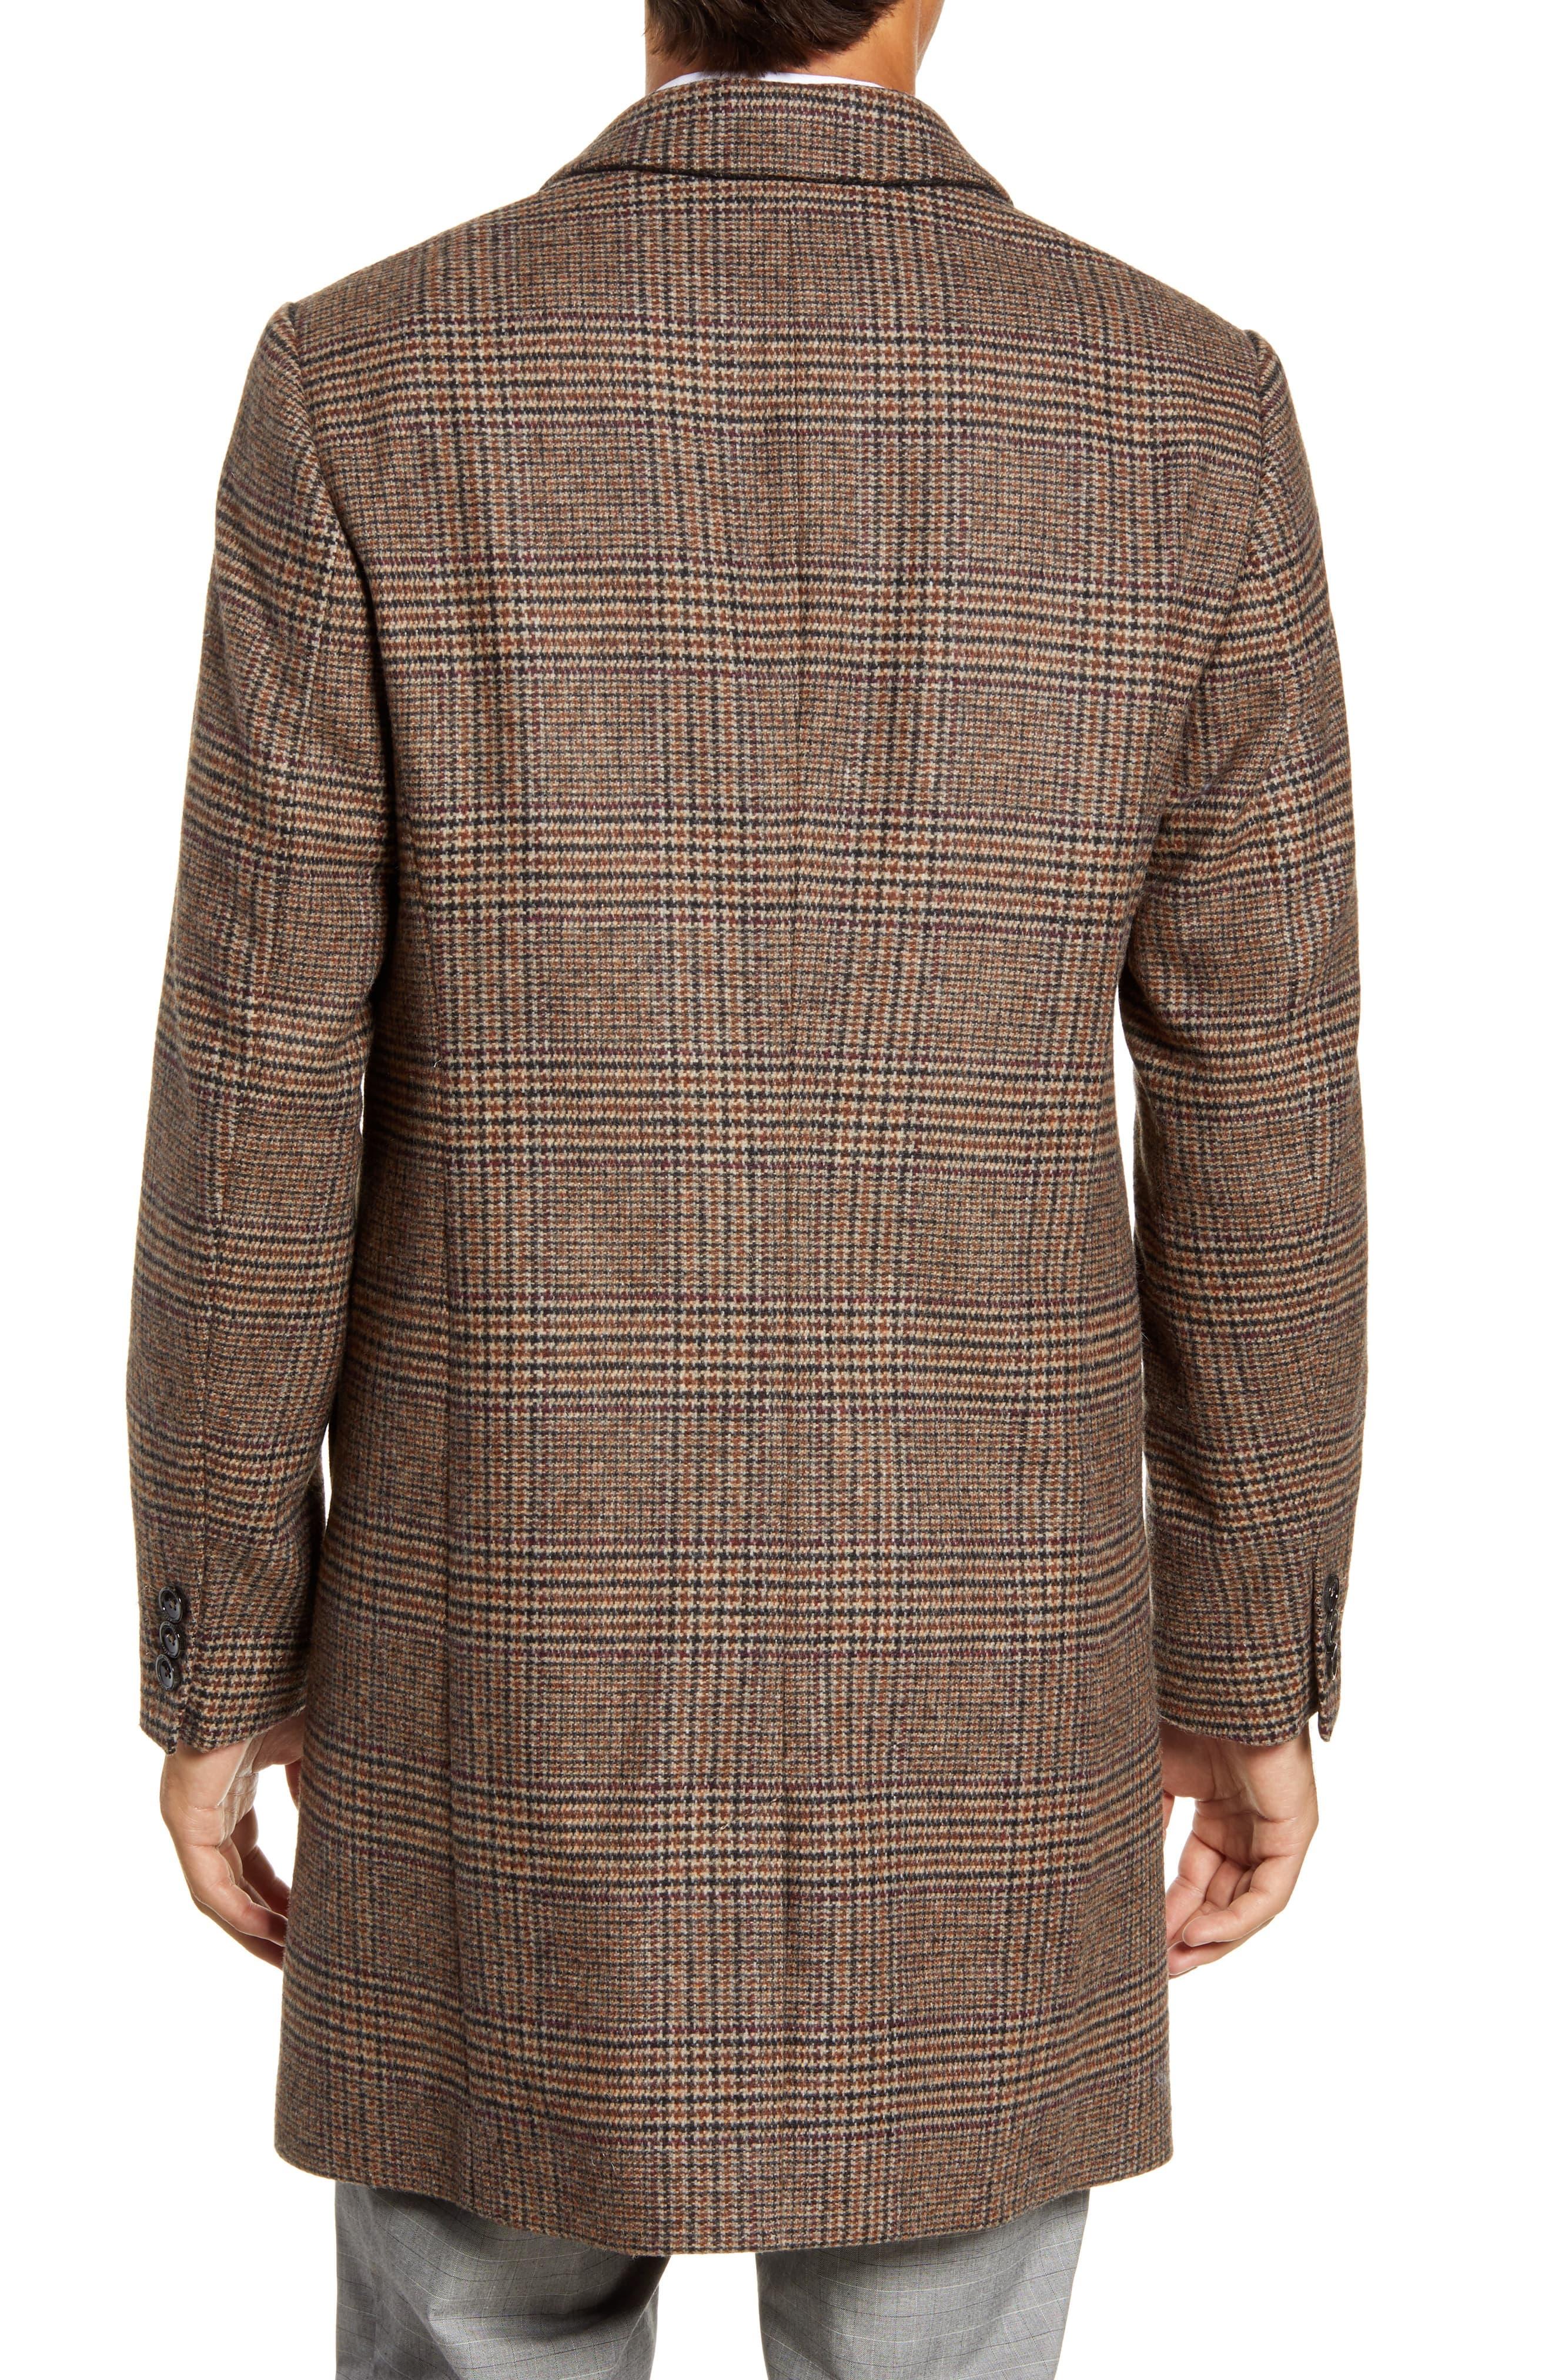 Ted Baker Wool Rhyl Heritage Check Overcoat in Brown for Men - Lyst